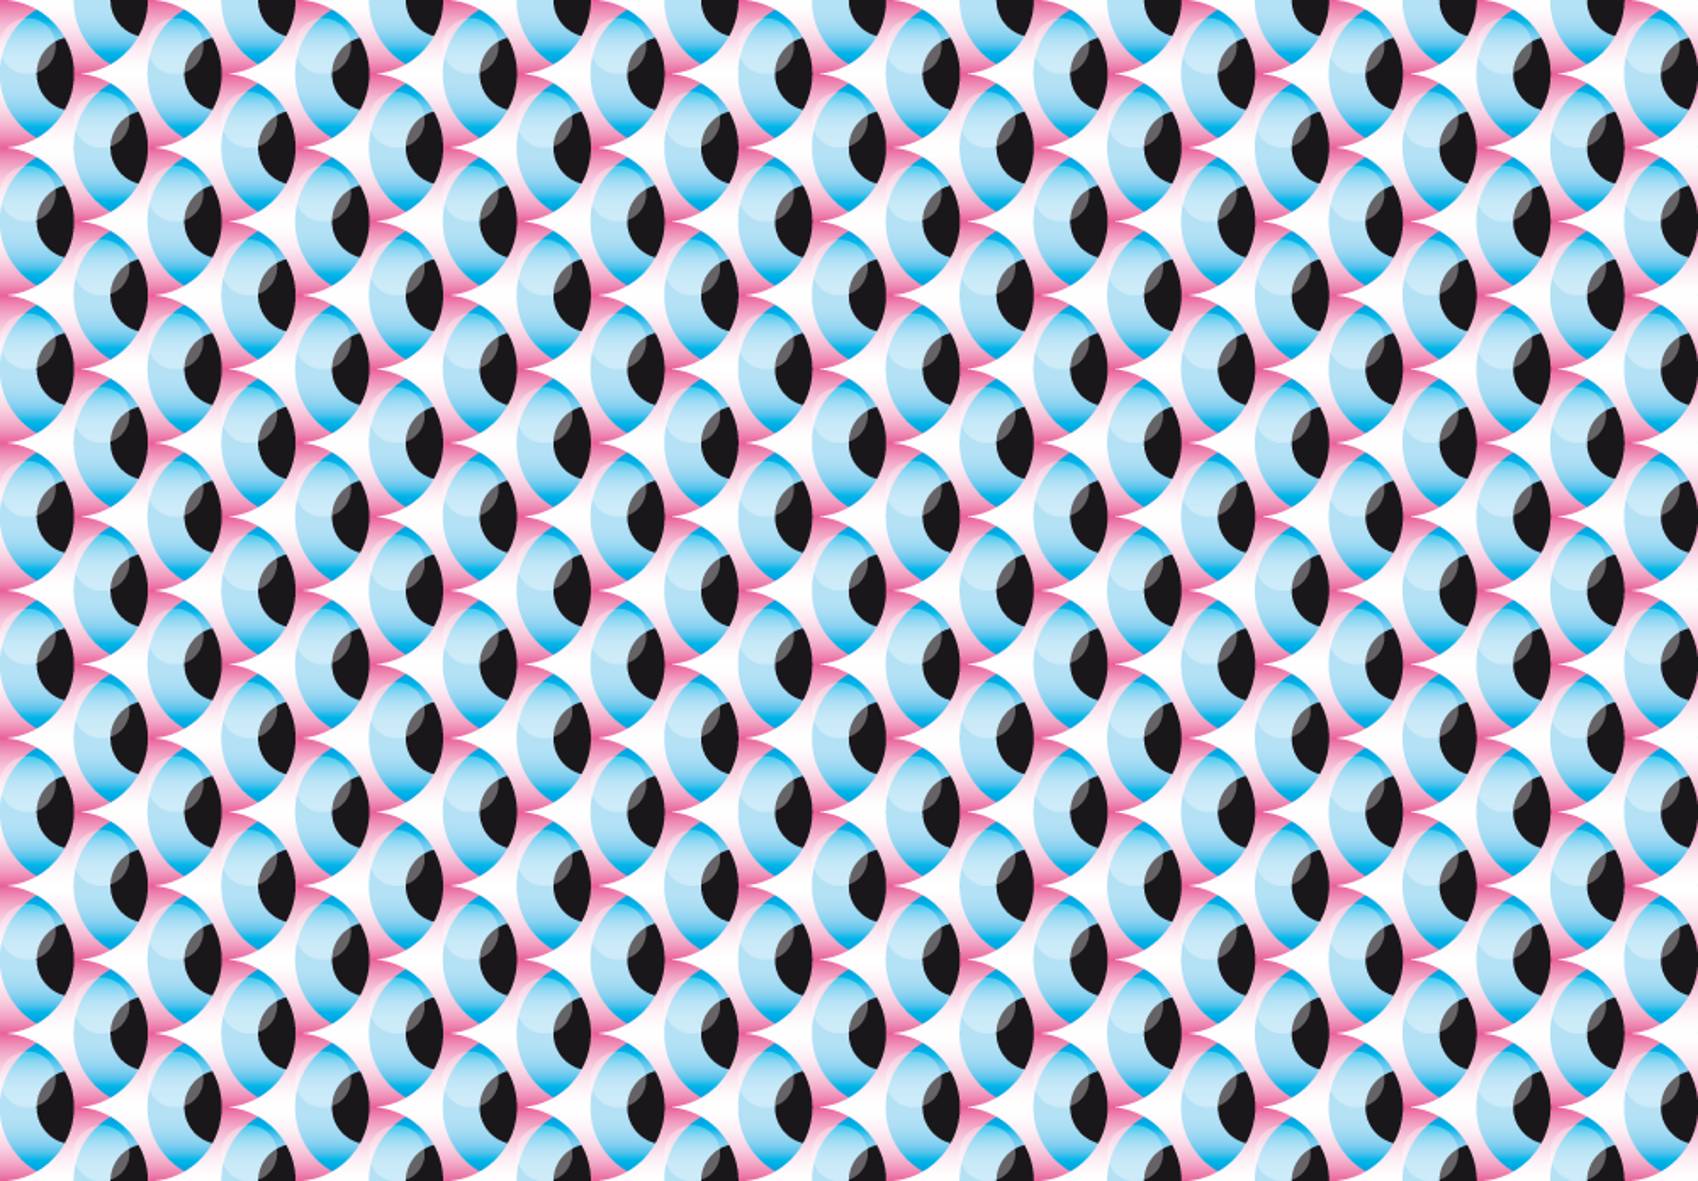 FishEyes pattern